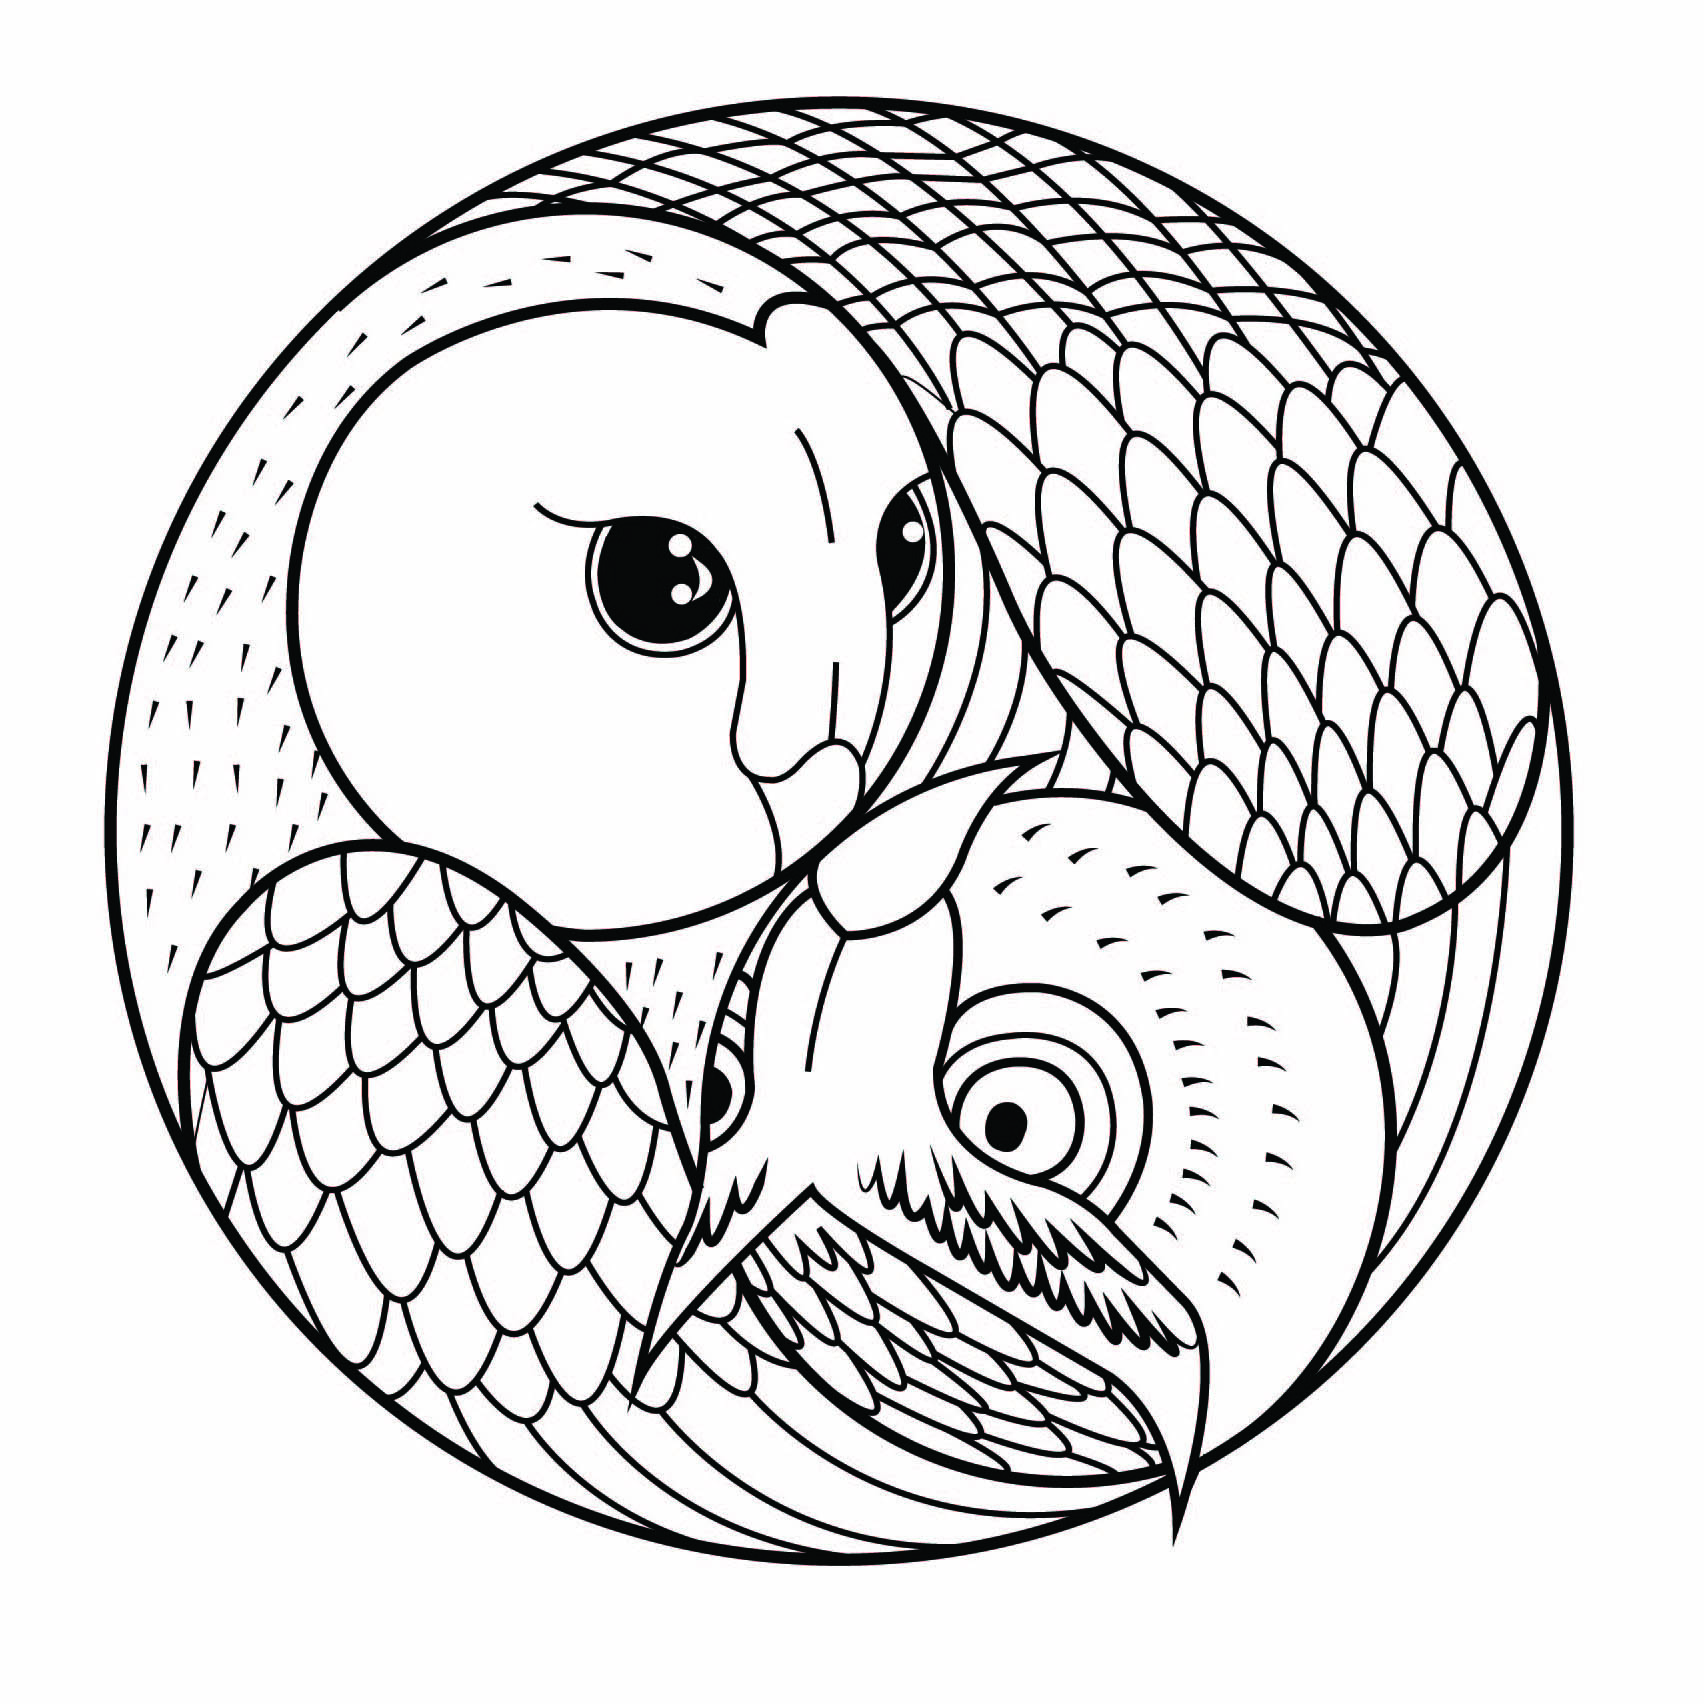 Mandala Simple With 2 Owls